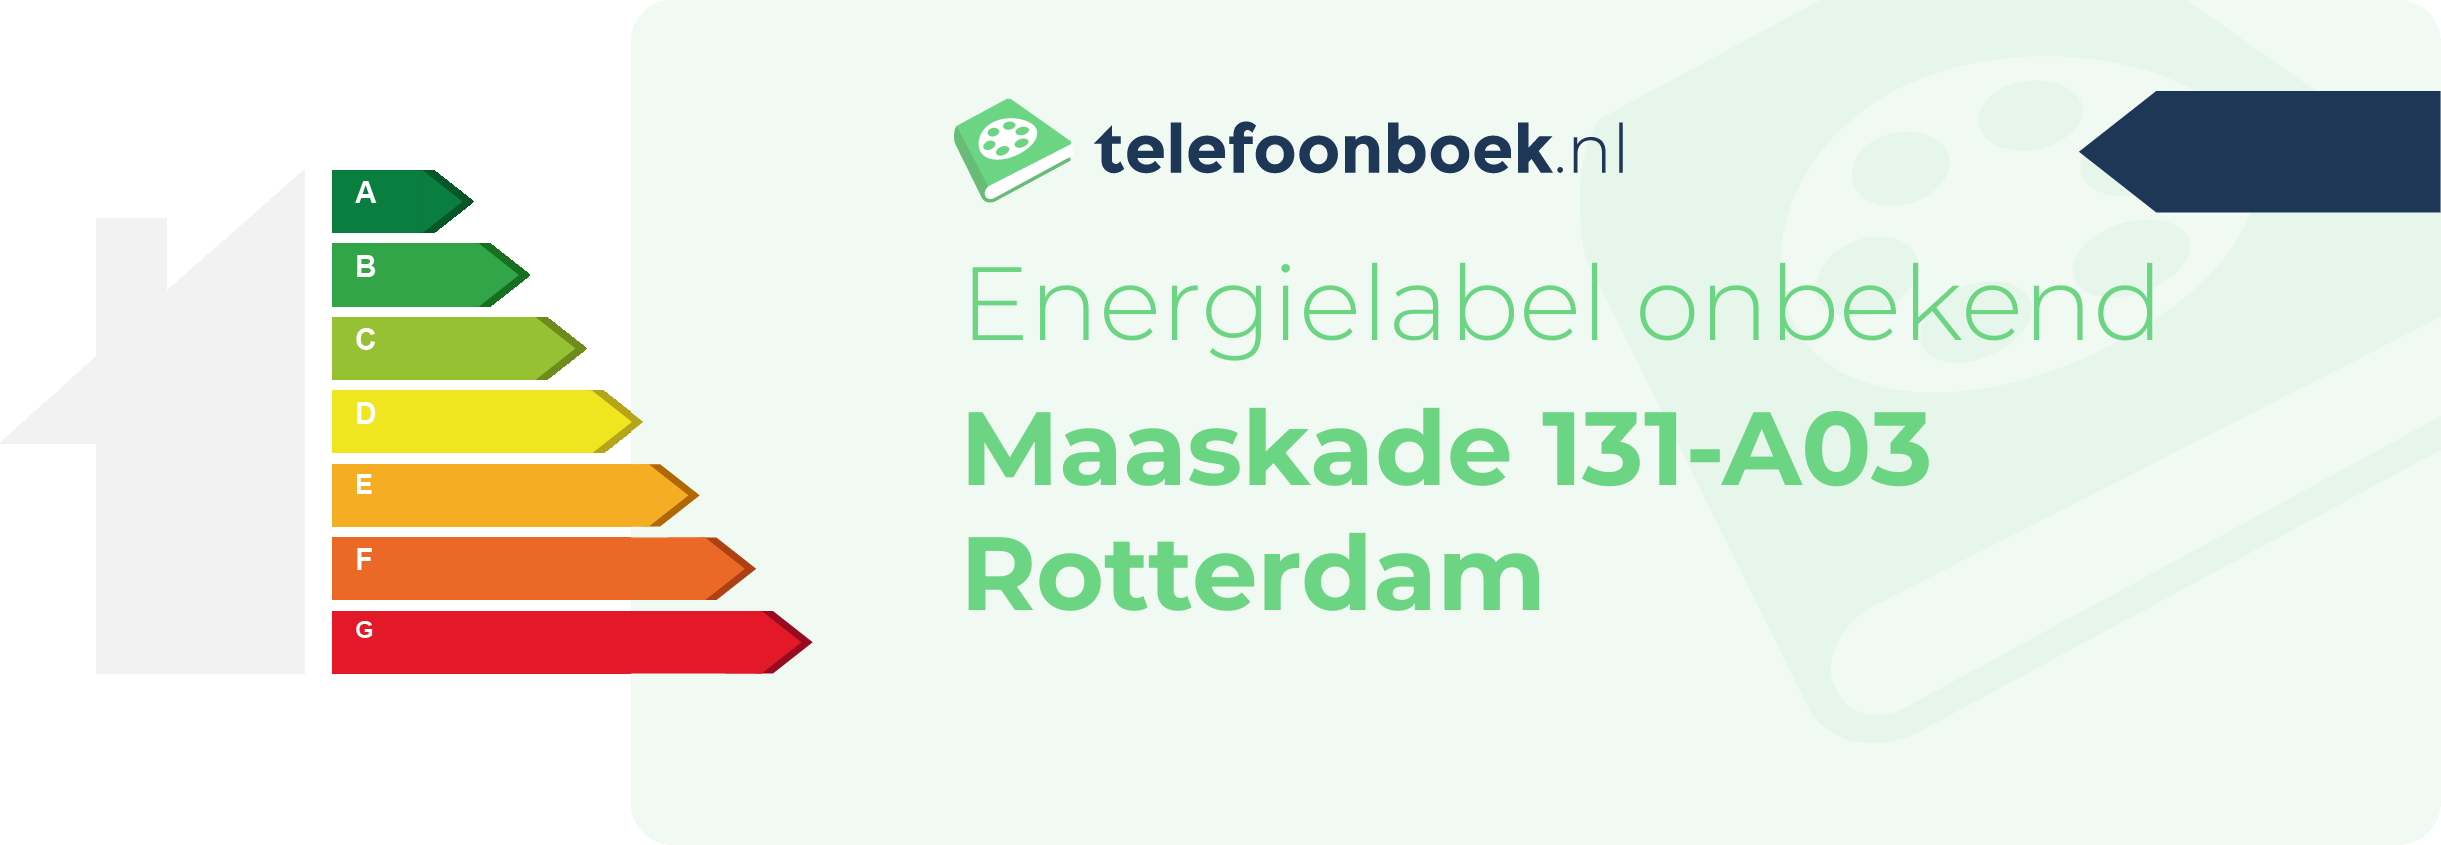 Energielabel Maaskade 131-A03 Rotterdam